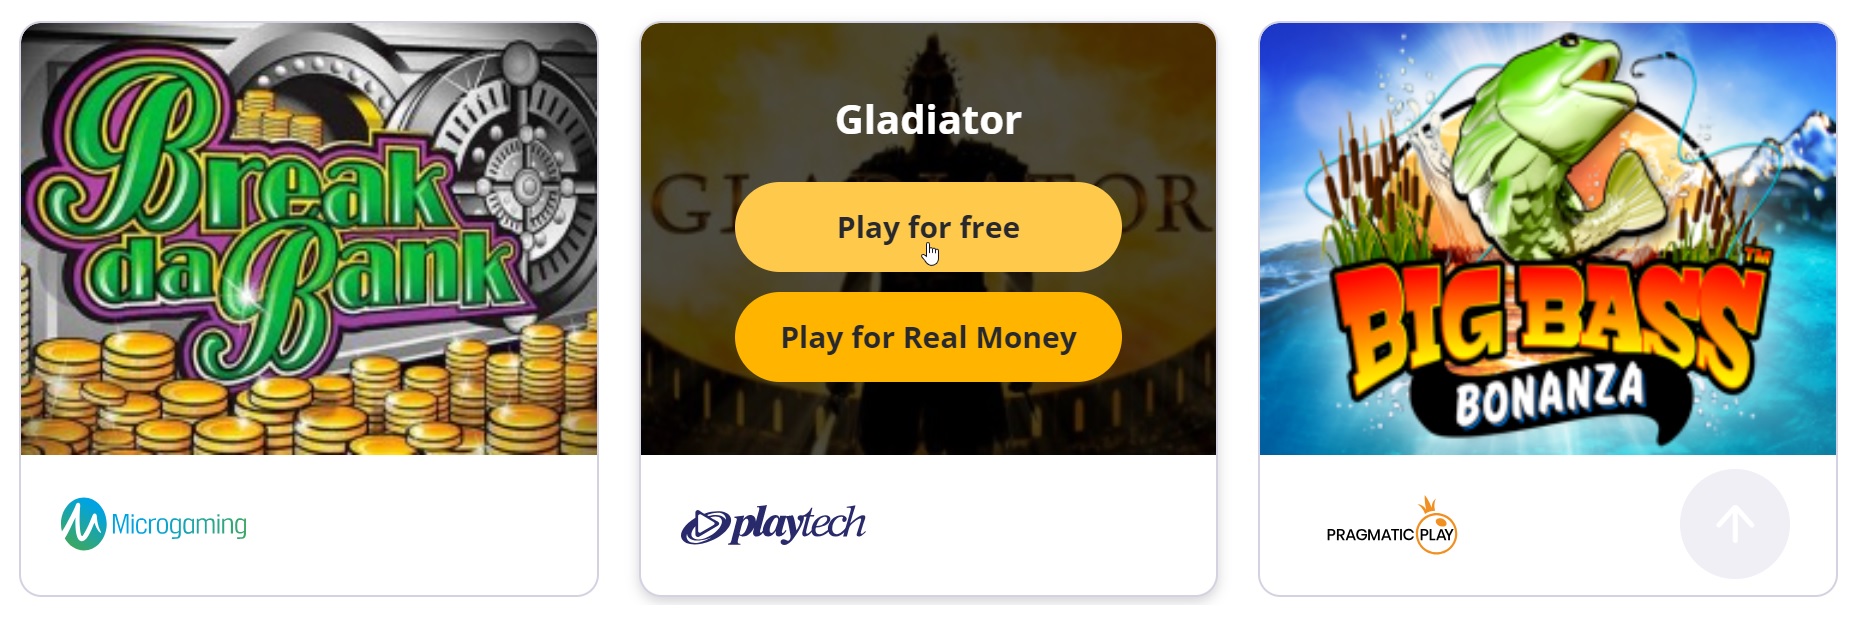 Online Casino - Free Games - Screenshot from Casino.org - MGJ